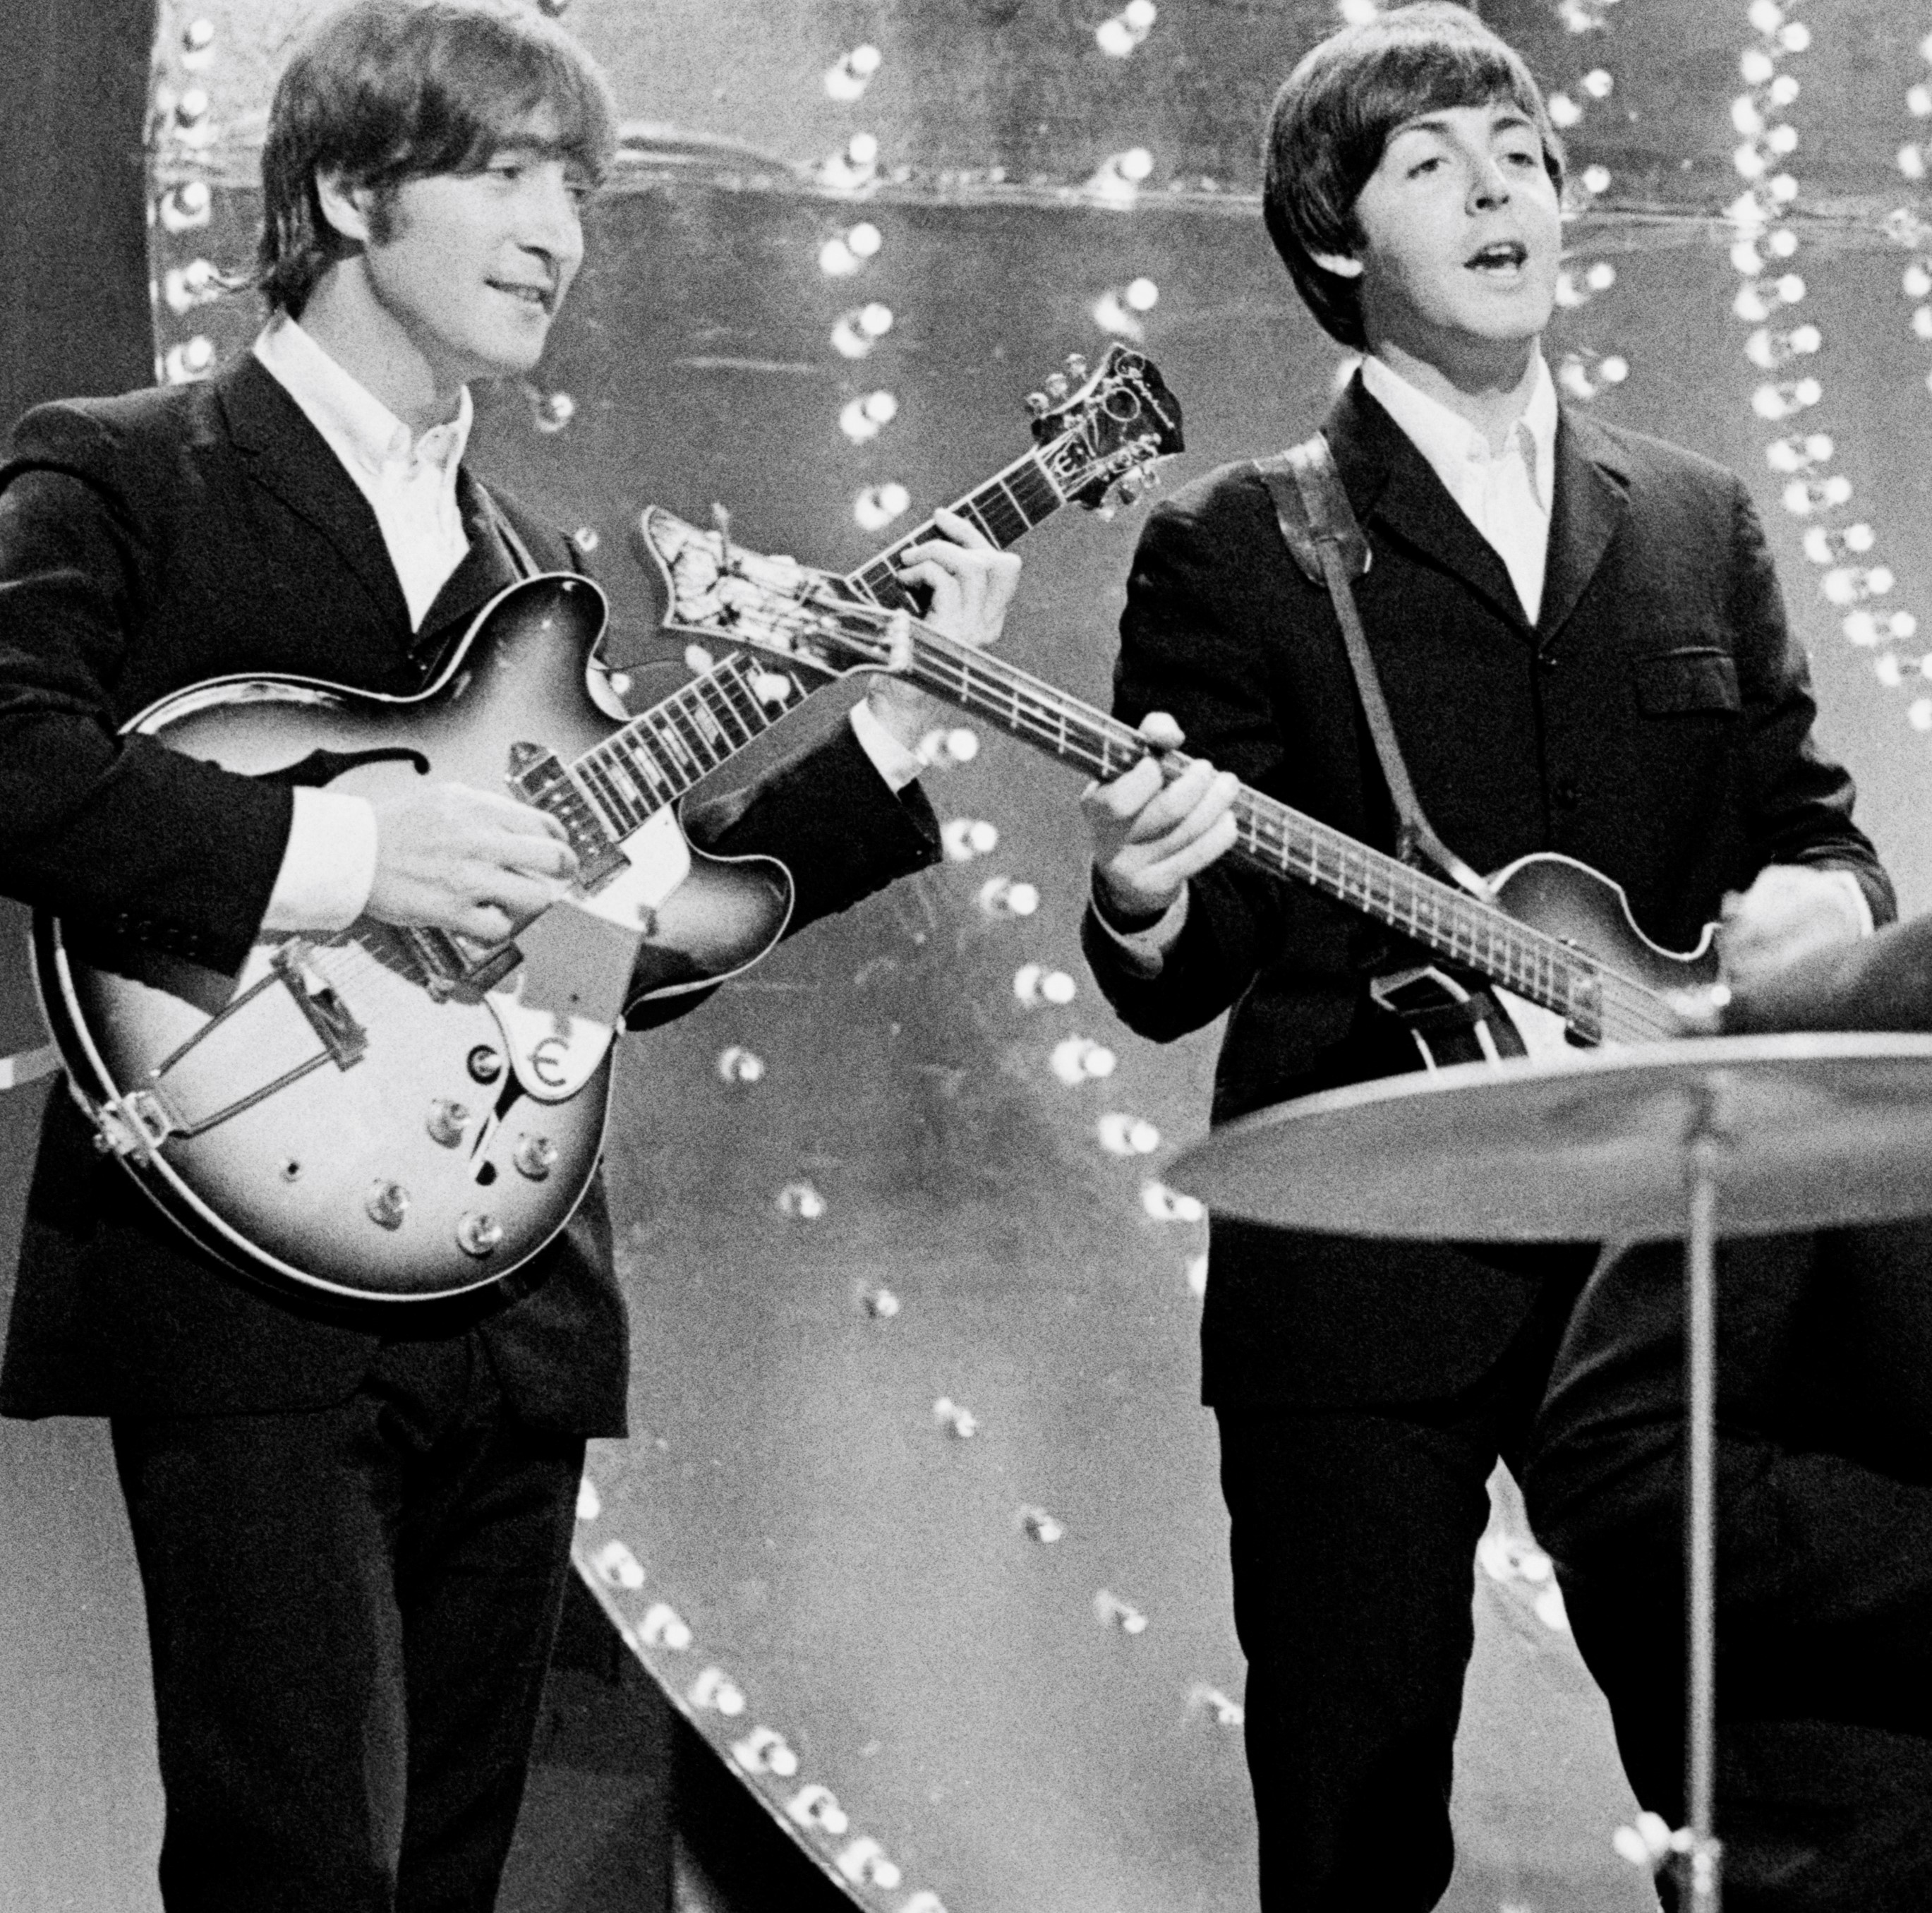 John Lennon and Paul McCartney play the Beatles' songs on guitars